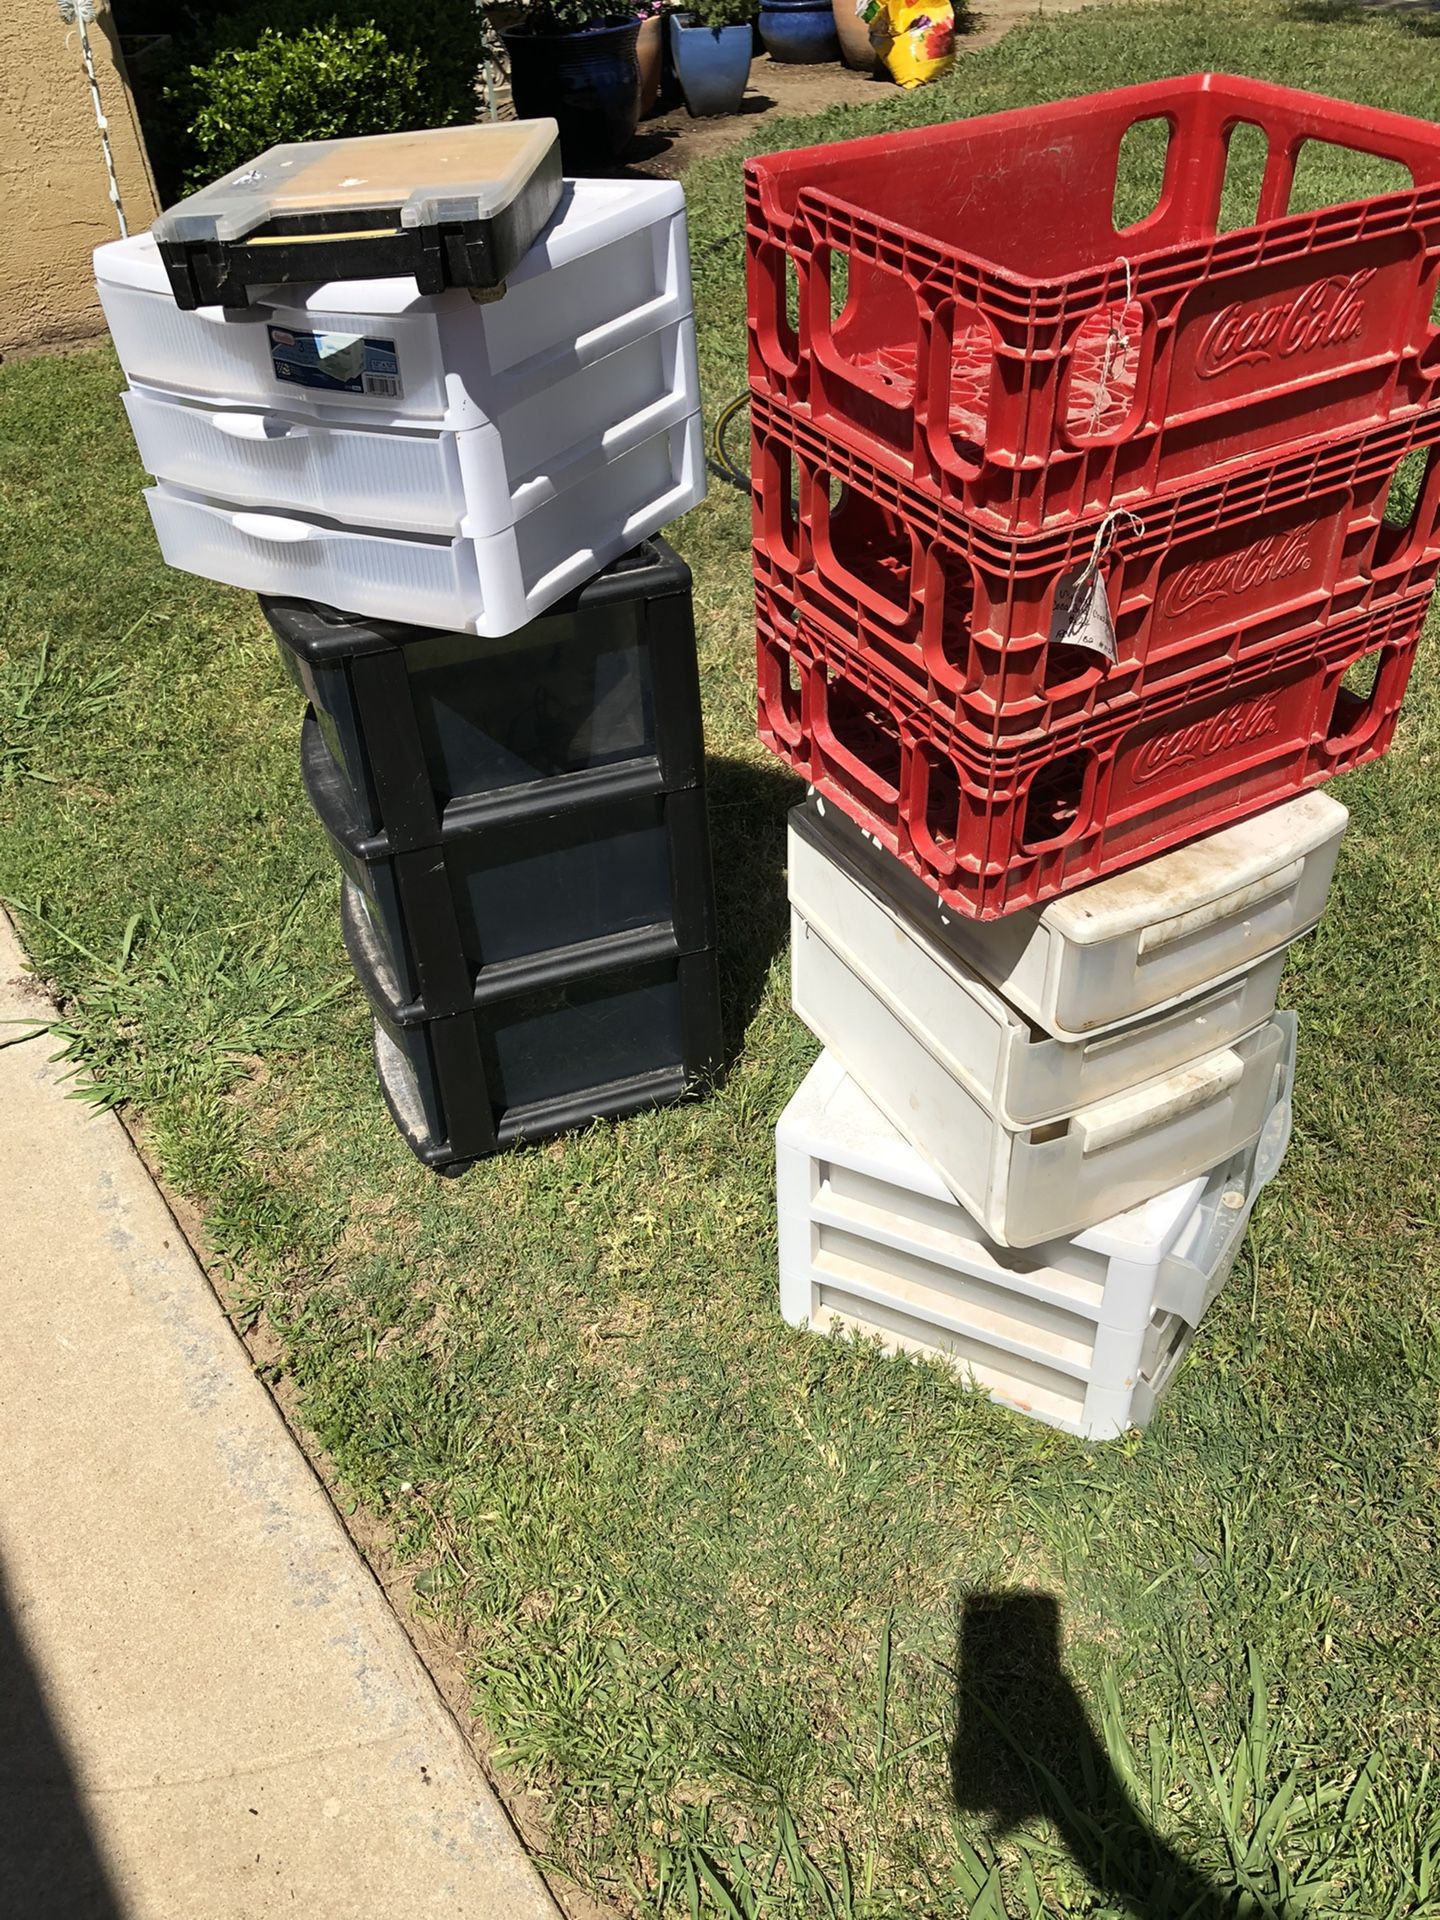 Storage organizers and Coca-Cola crates